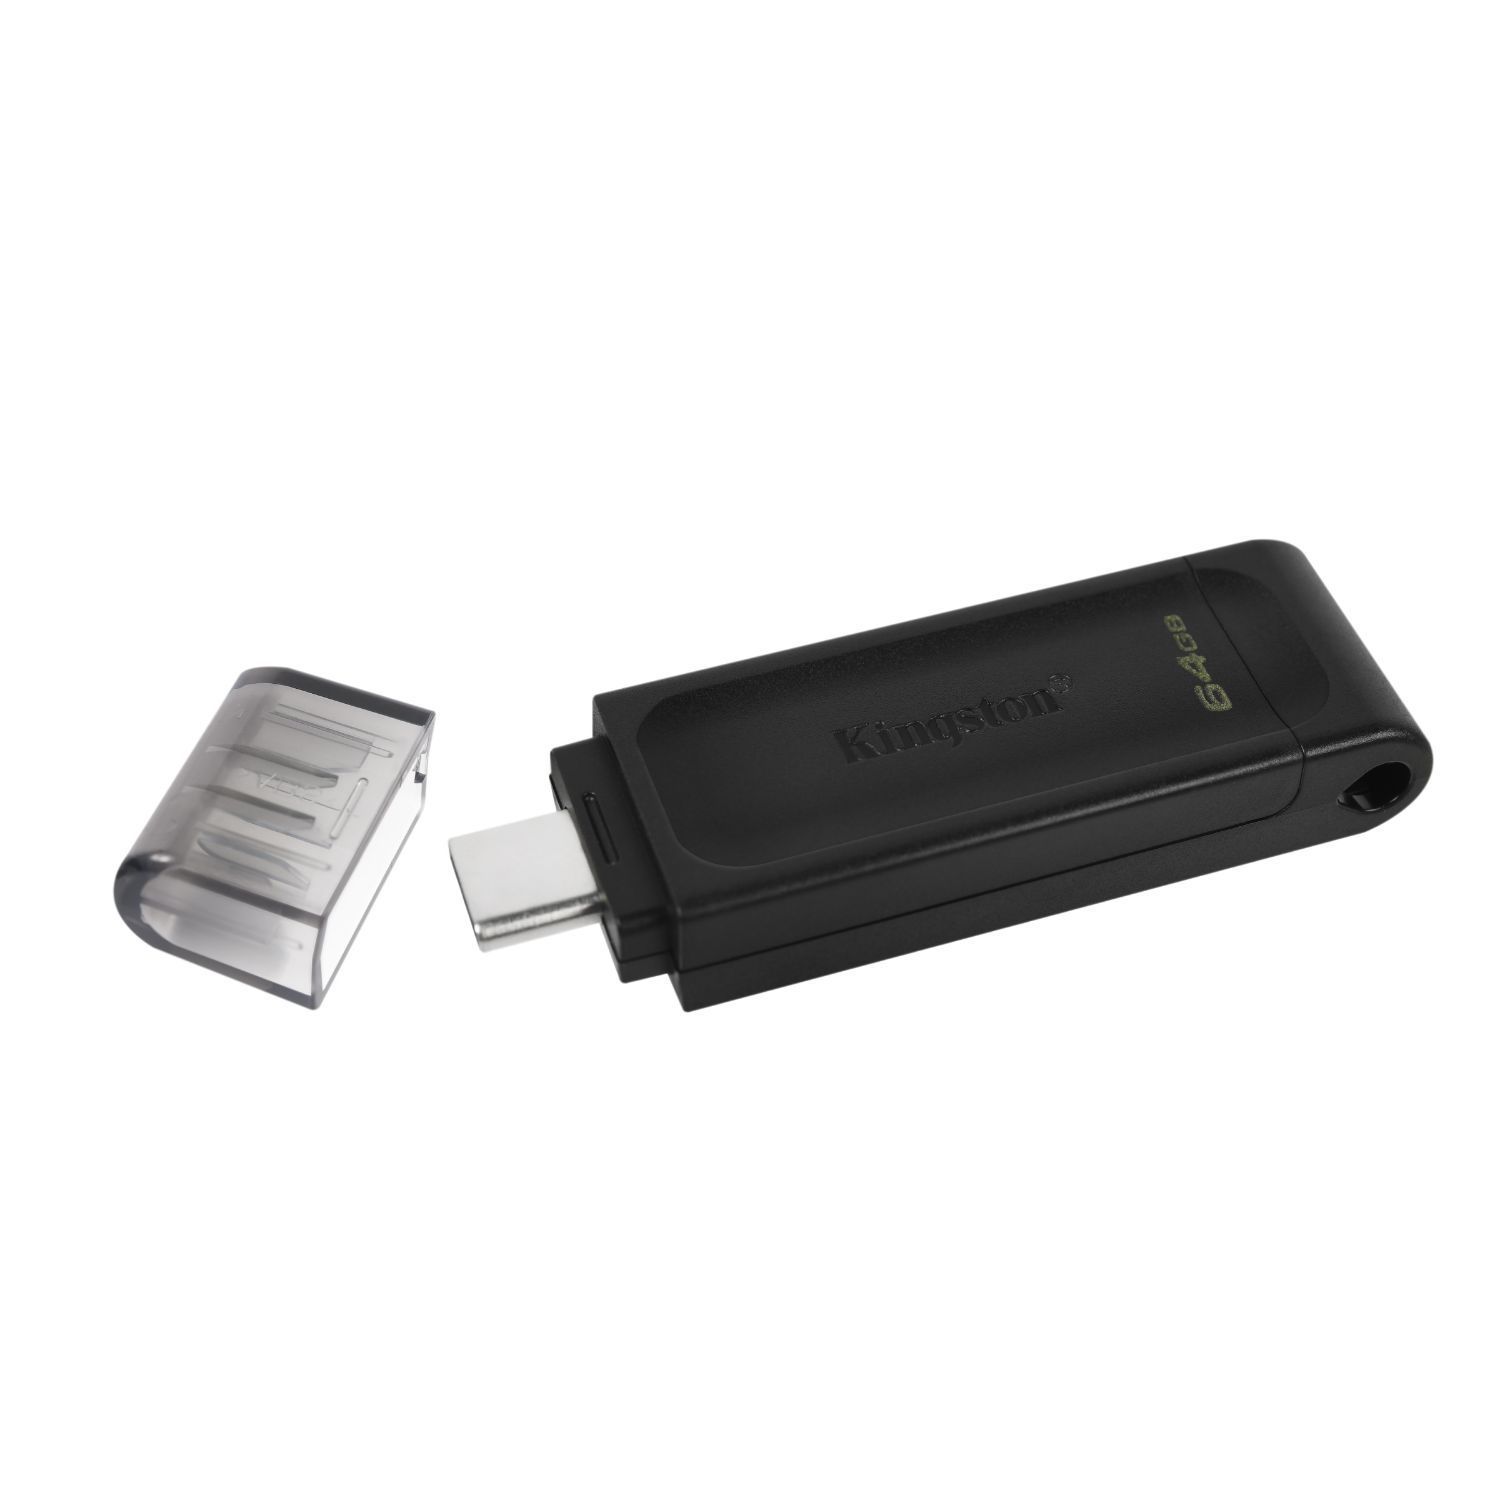 DT70/64GB - Pendrive Kingston Data Traveler DT70 64Gb USB-C 3.0 Tapa Negro (DT70/64GB)